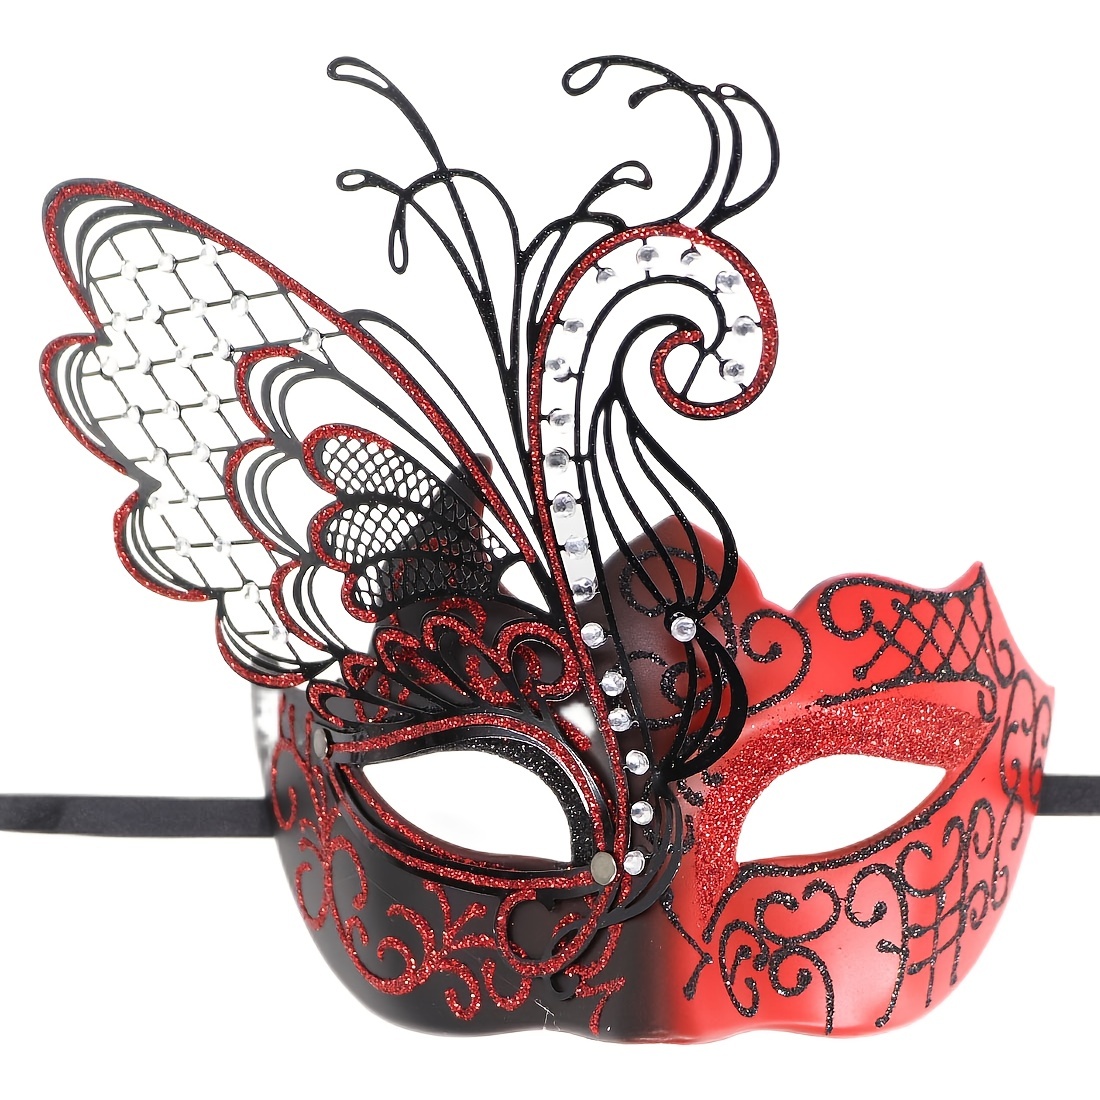 New Full Face Lace Metal Masquerade Mask Black Masquerade Ball Halloween  Mask